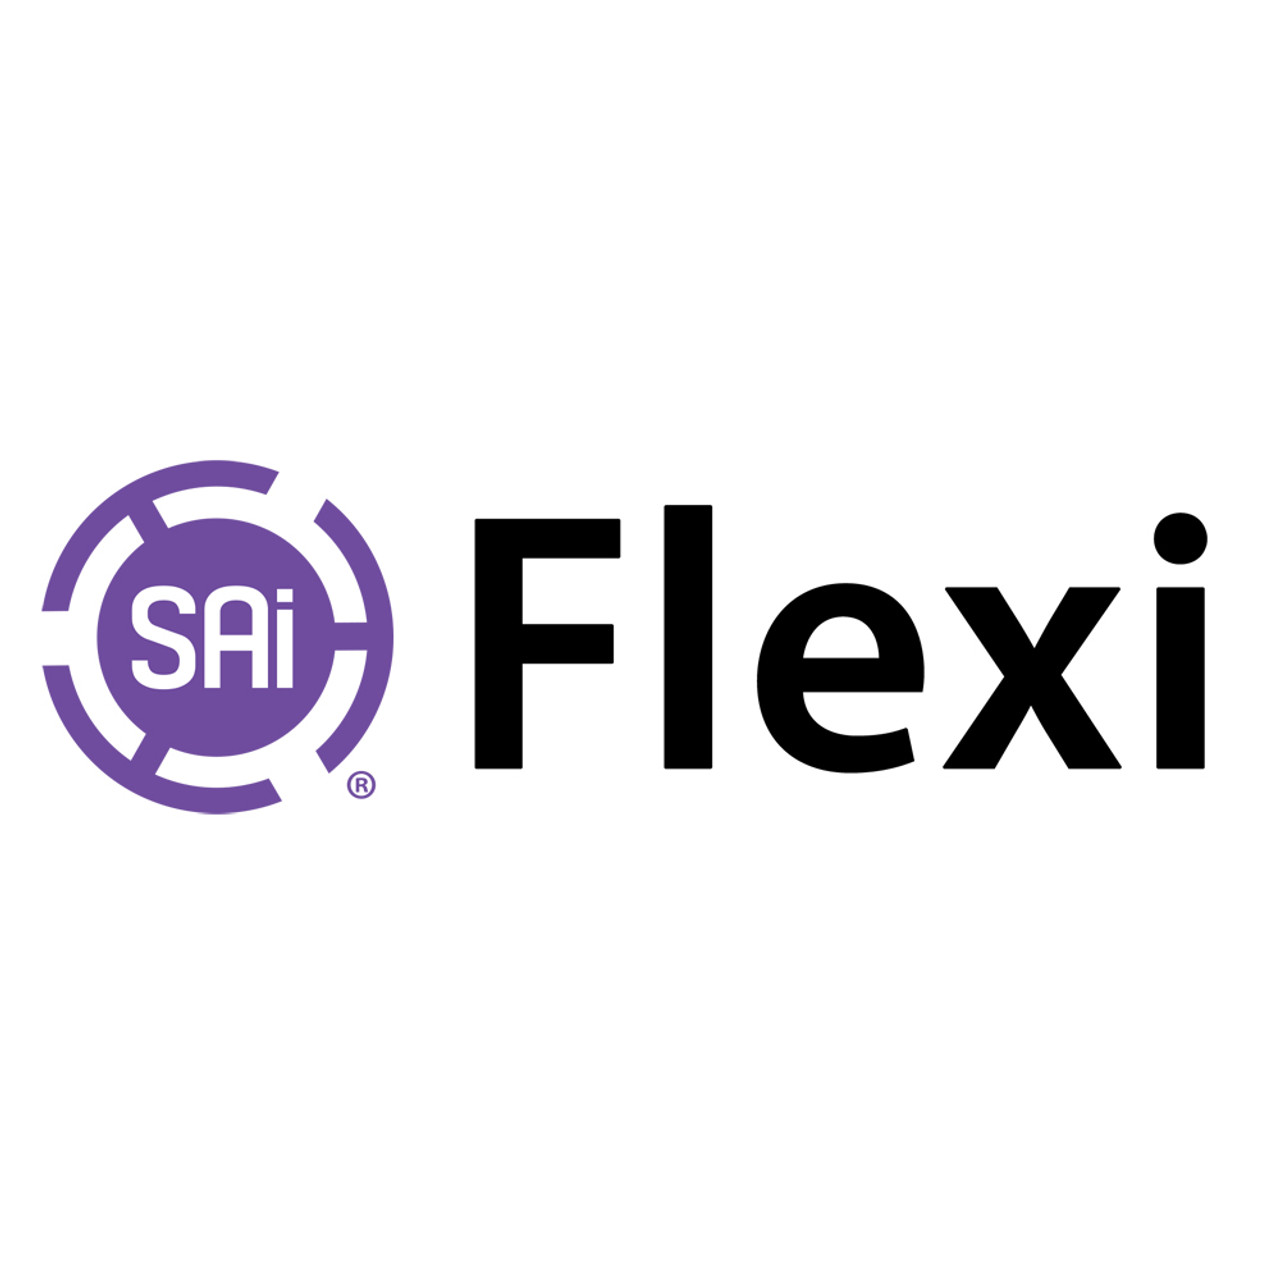 can run flexi 8 with windows 7